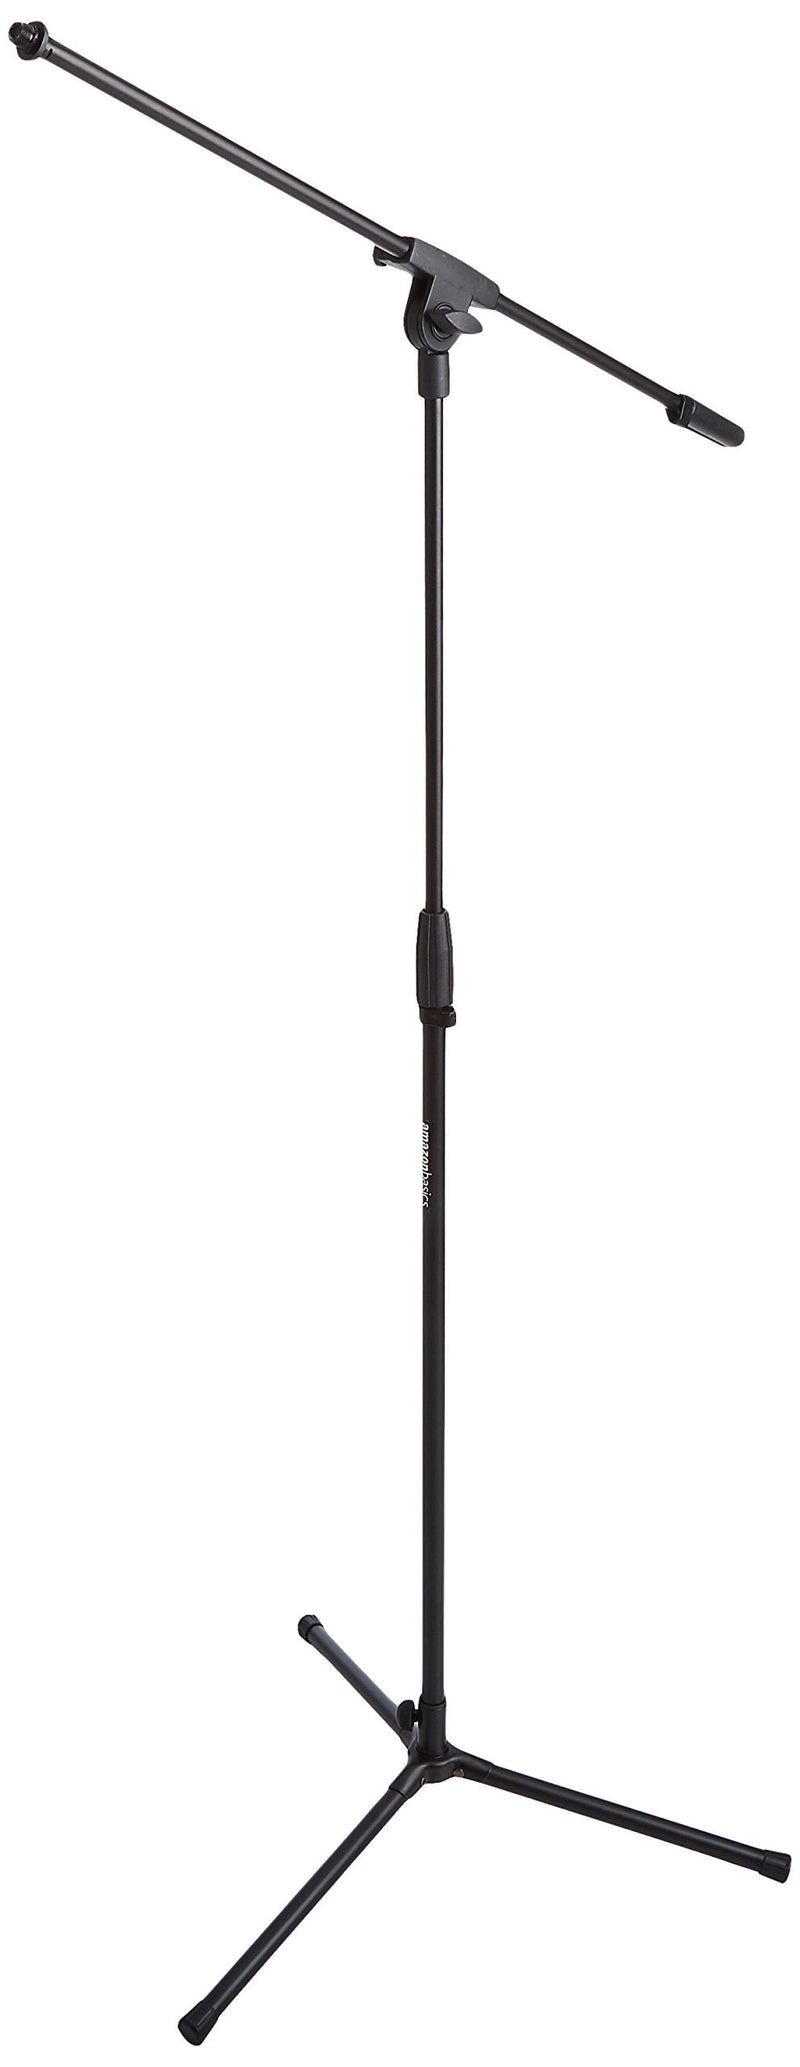  [AUSTRALIA] - Hosa HMIC-010 Pro Microphone Cable, REAN XLR3F to XLR3M Connectors, 10 feet Cable Length, Silver-Plated REAN Connectors & Amazon Basics Tripod Boom Microphone Stand Cable + Stand